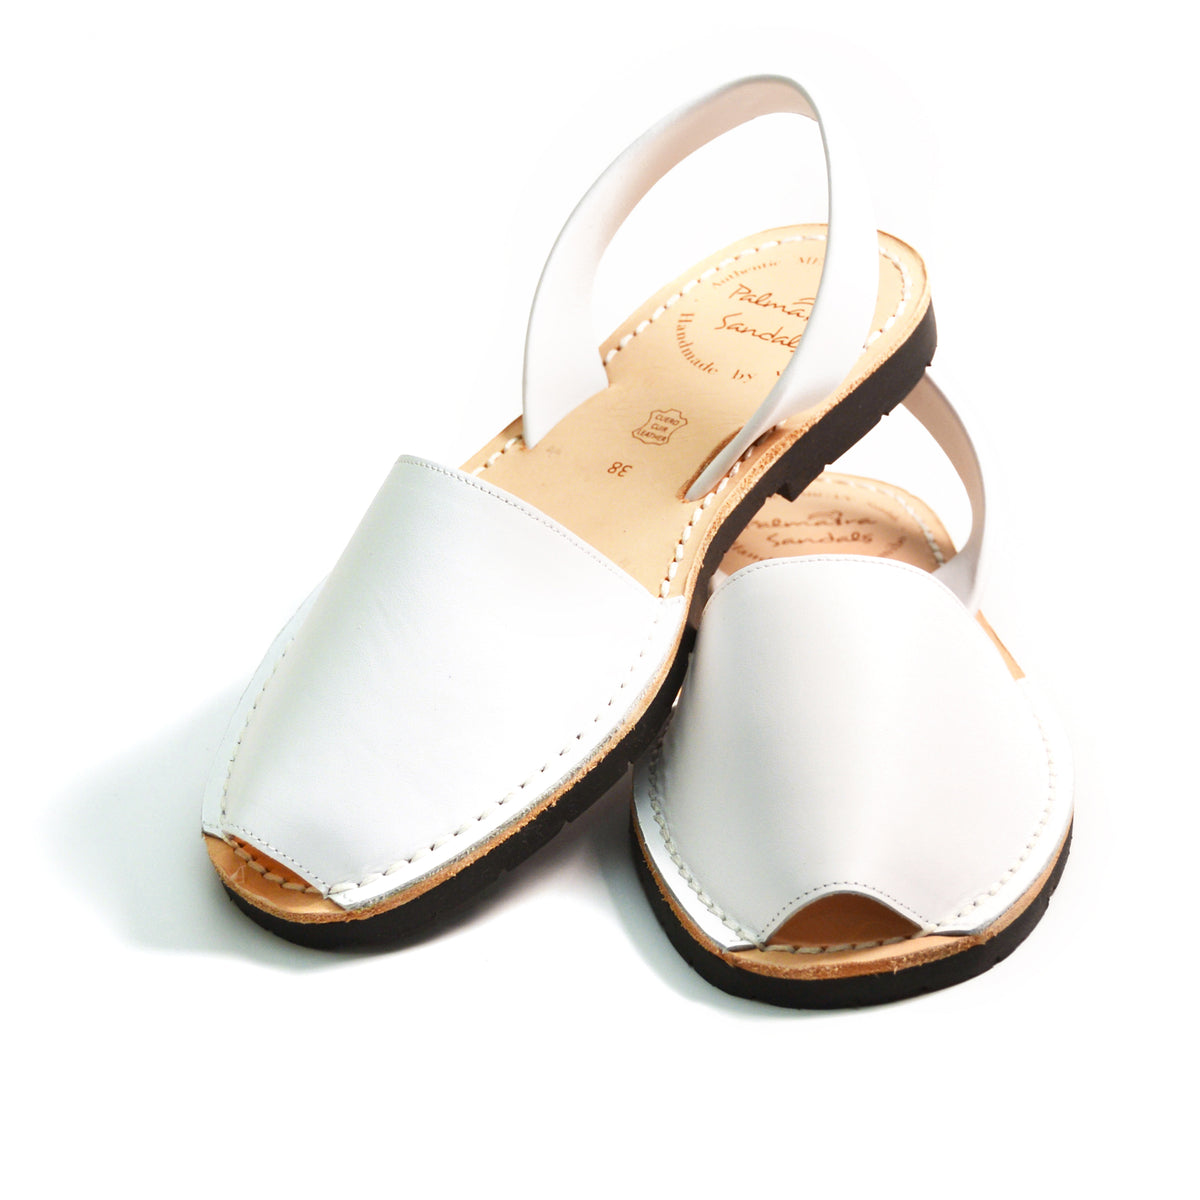 white leather Spanish menorcan avarcas sandals